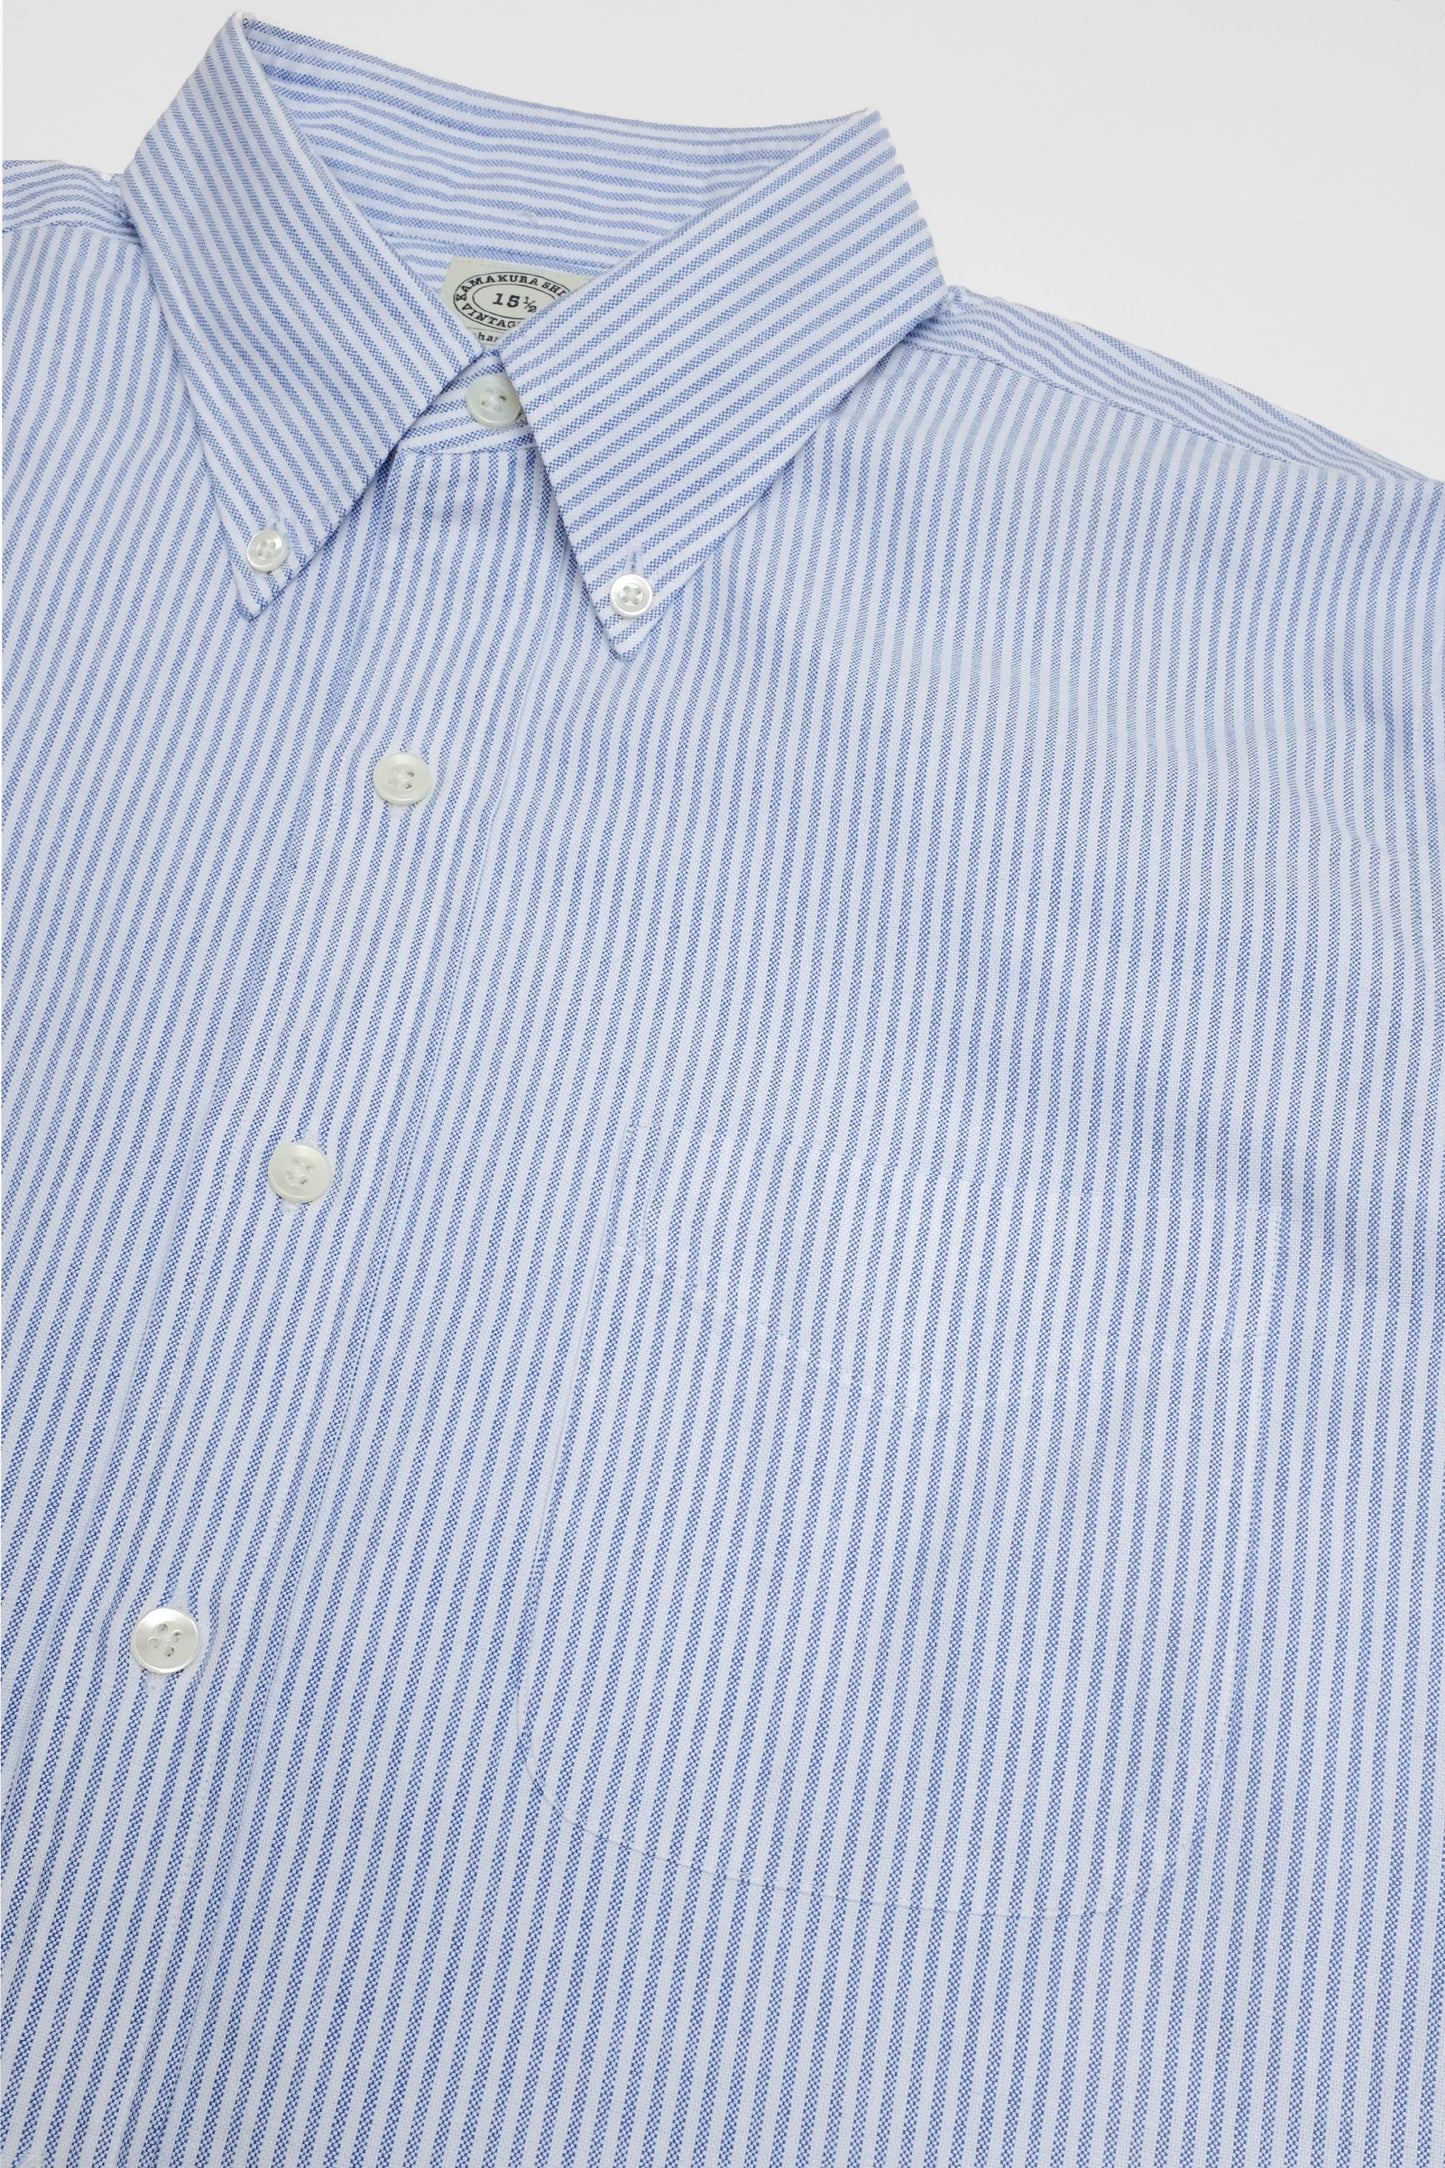 'Vintage Ivy' Shirt in blue striped oxford